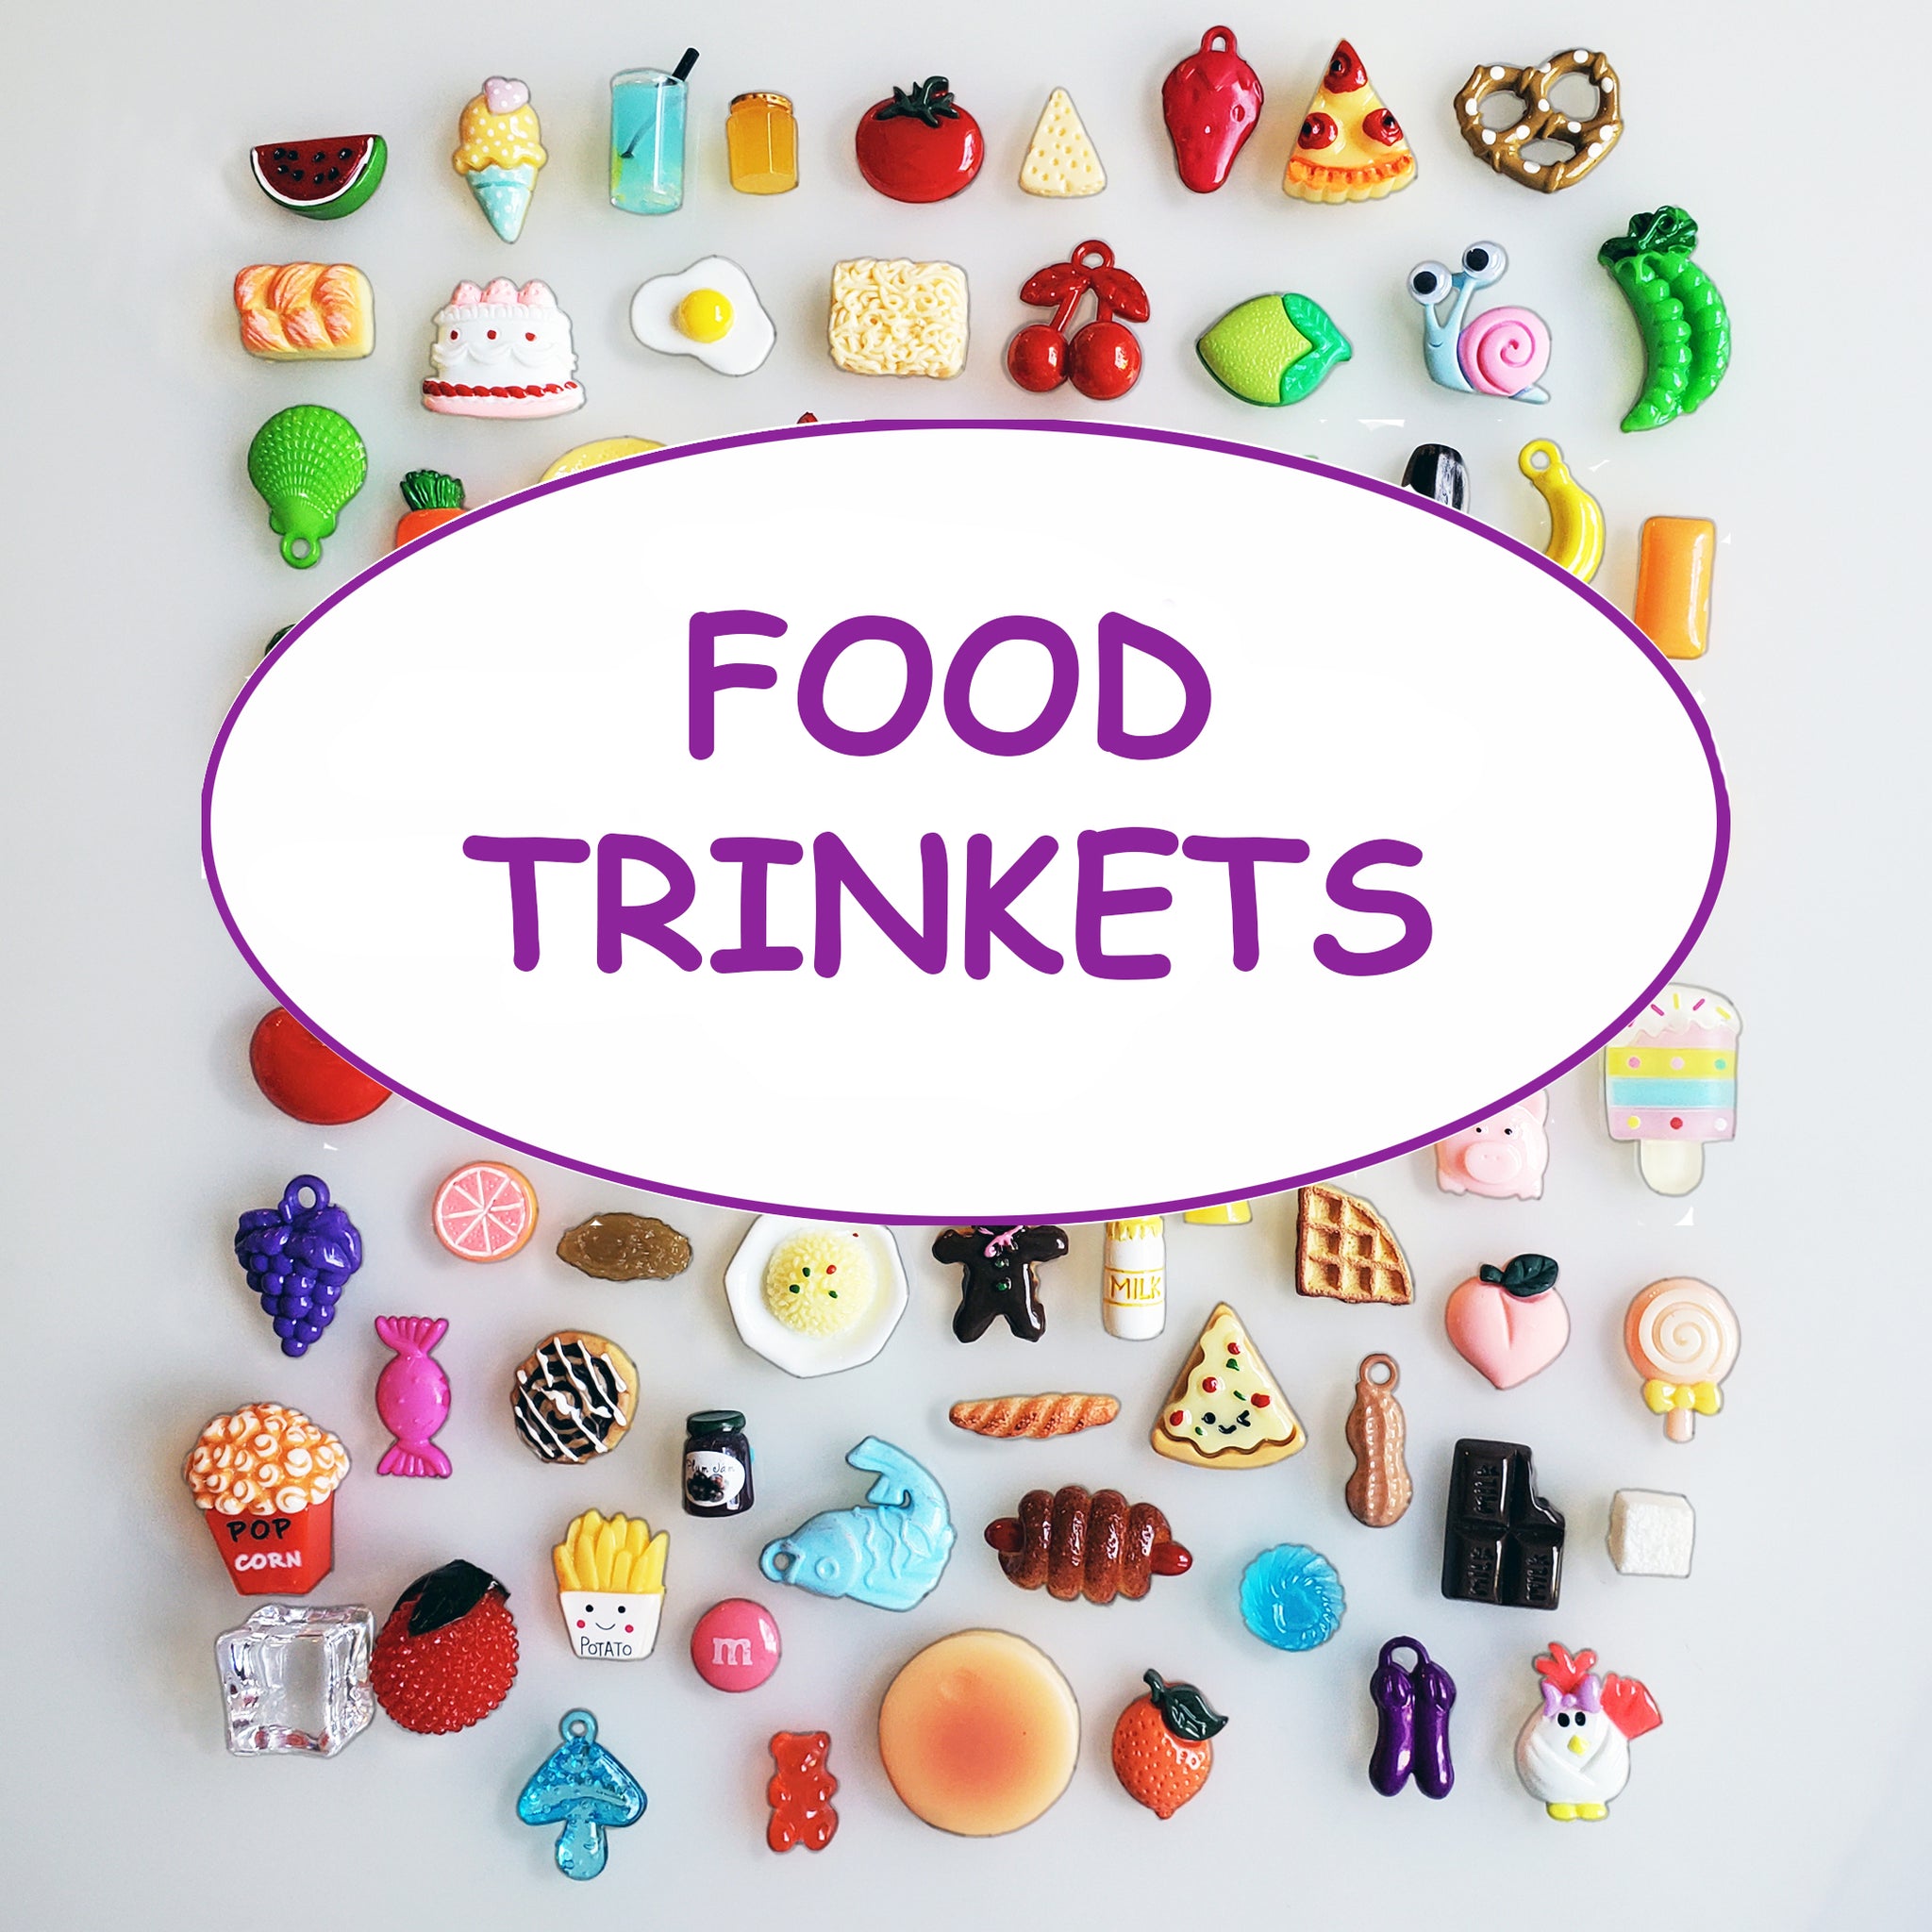 FOOD TRINKETS (50) for I Spy, Teaching, SLP, ESL, miniature food